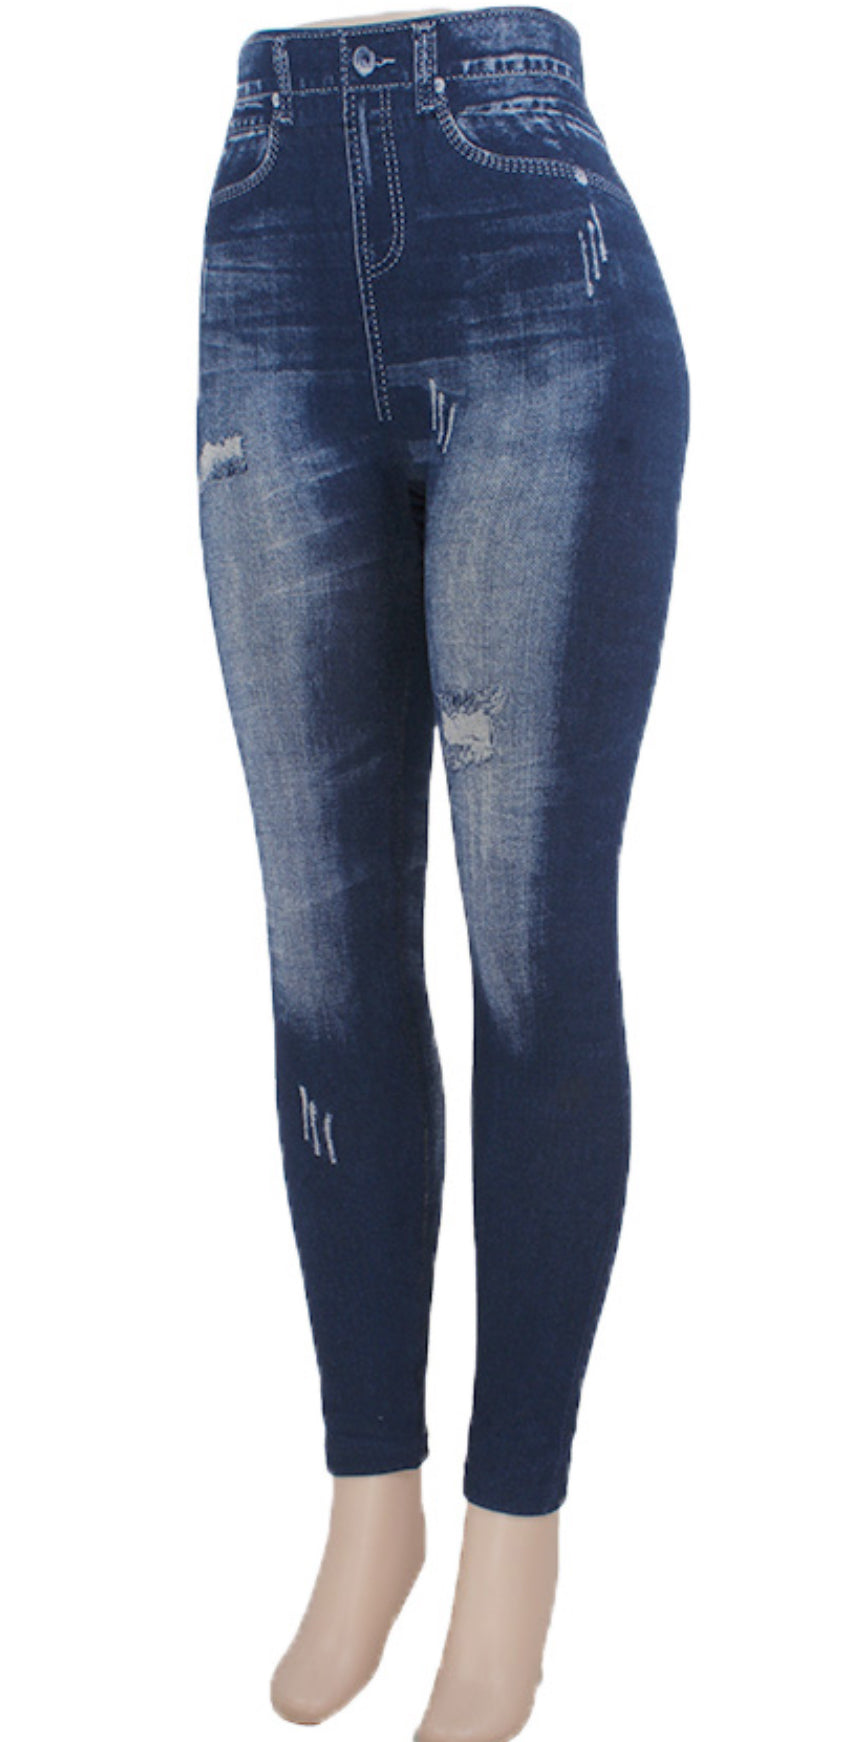 Blue Jean leggings 813